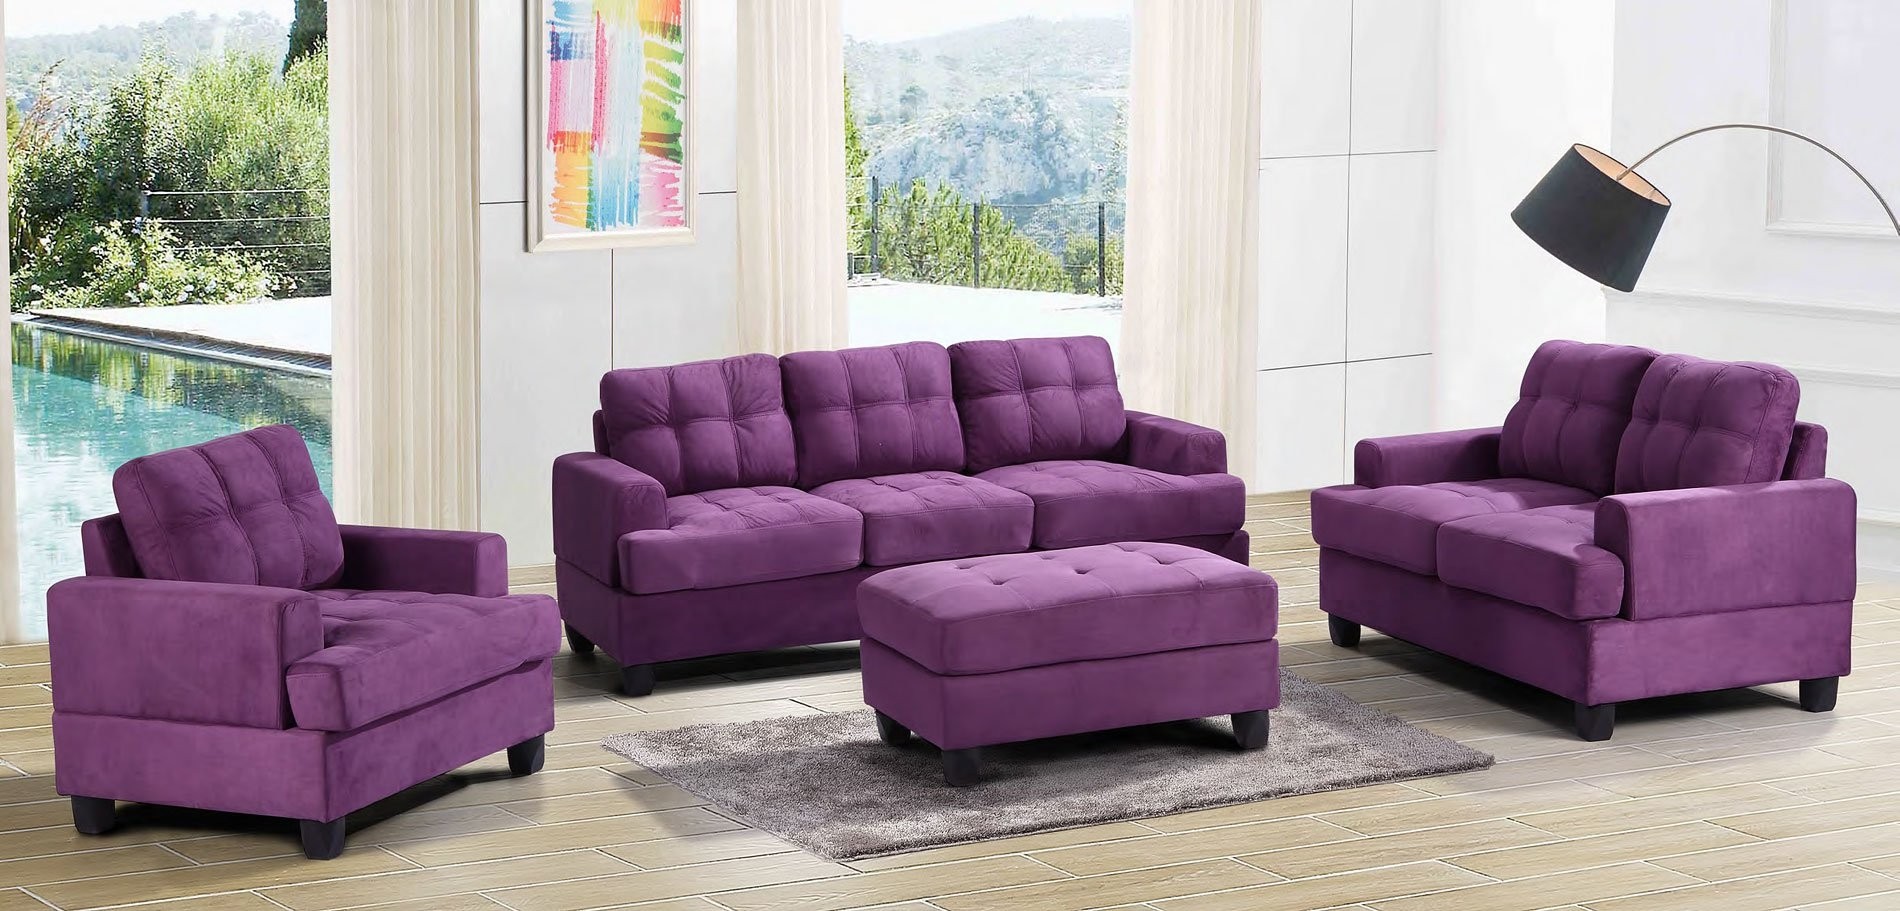 G517 living room set purple living room sets living